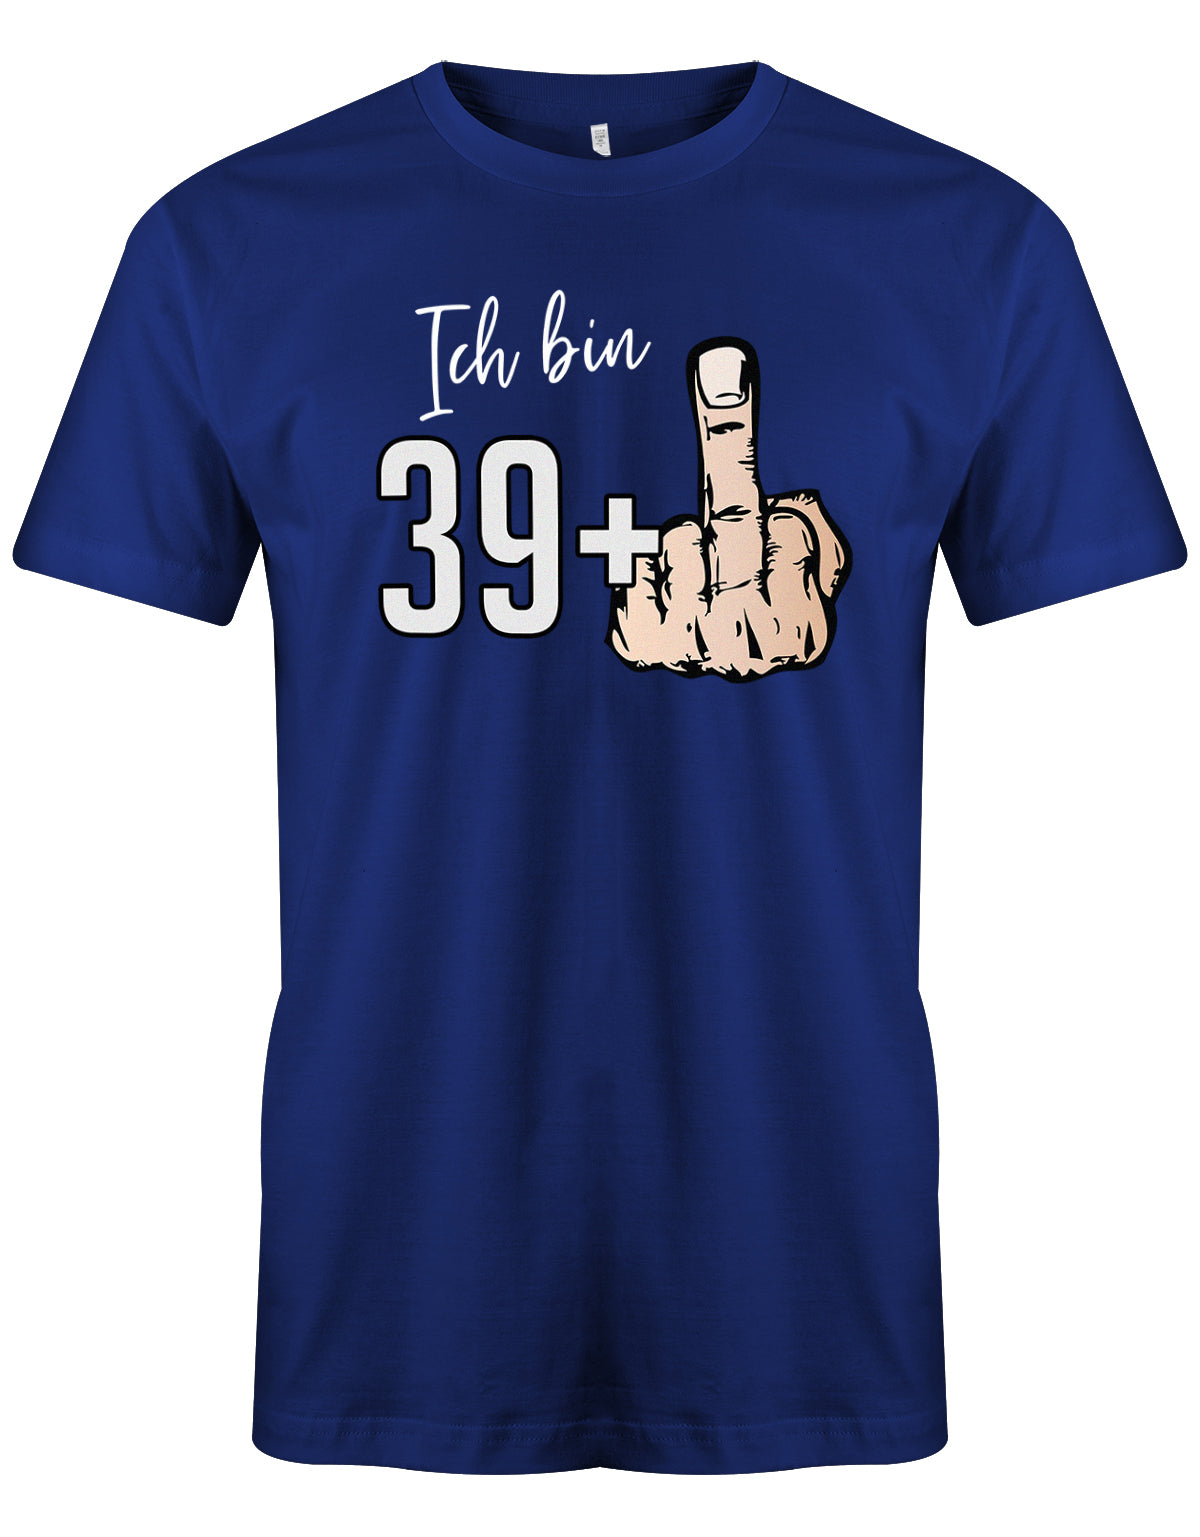 Ich bin 39 plus Mittelfinger - T-Shirt 40 Geburtstag Männer - Jahrgang 1983 TShirt Royalblau